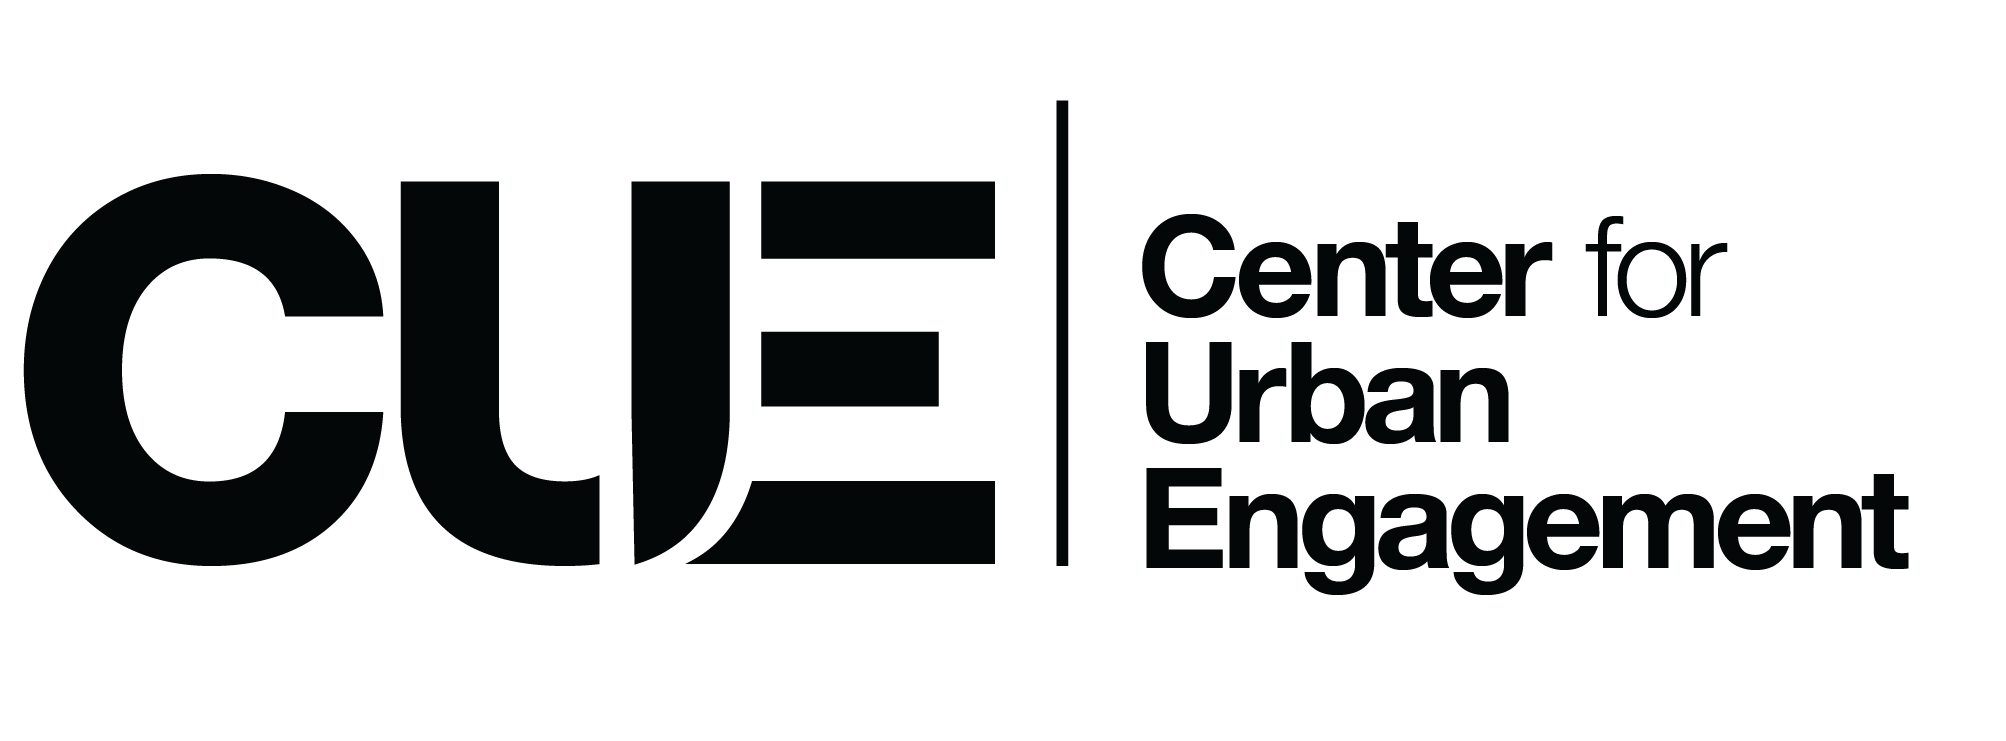 Center for Urban Engagement Logo - Black with Transparent Background